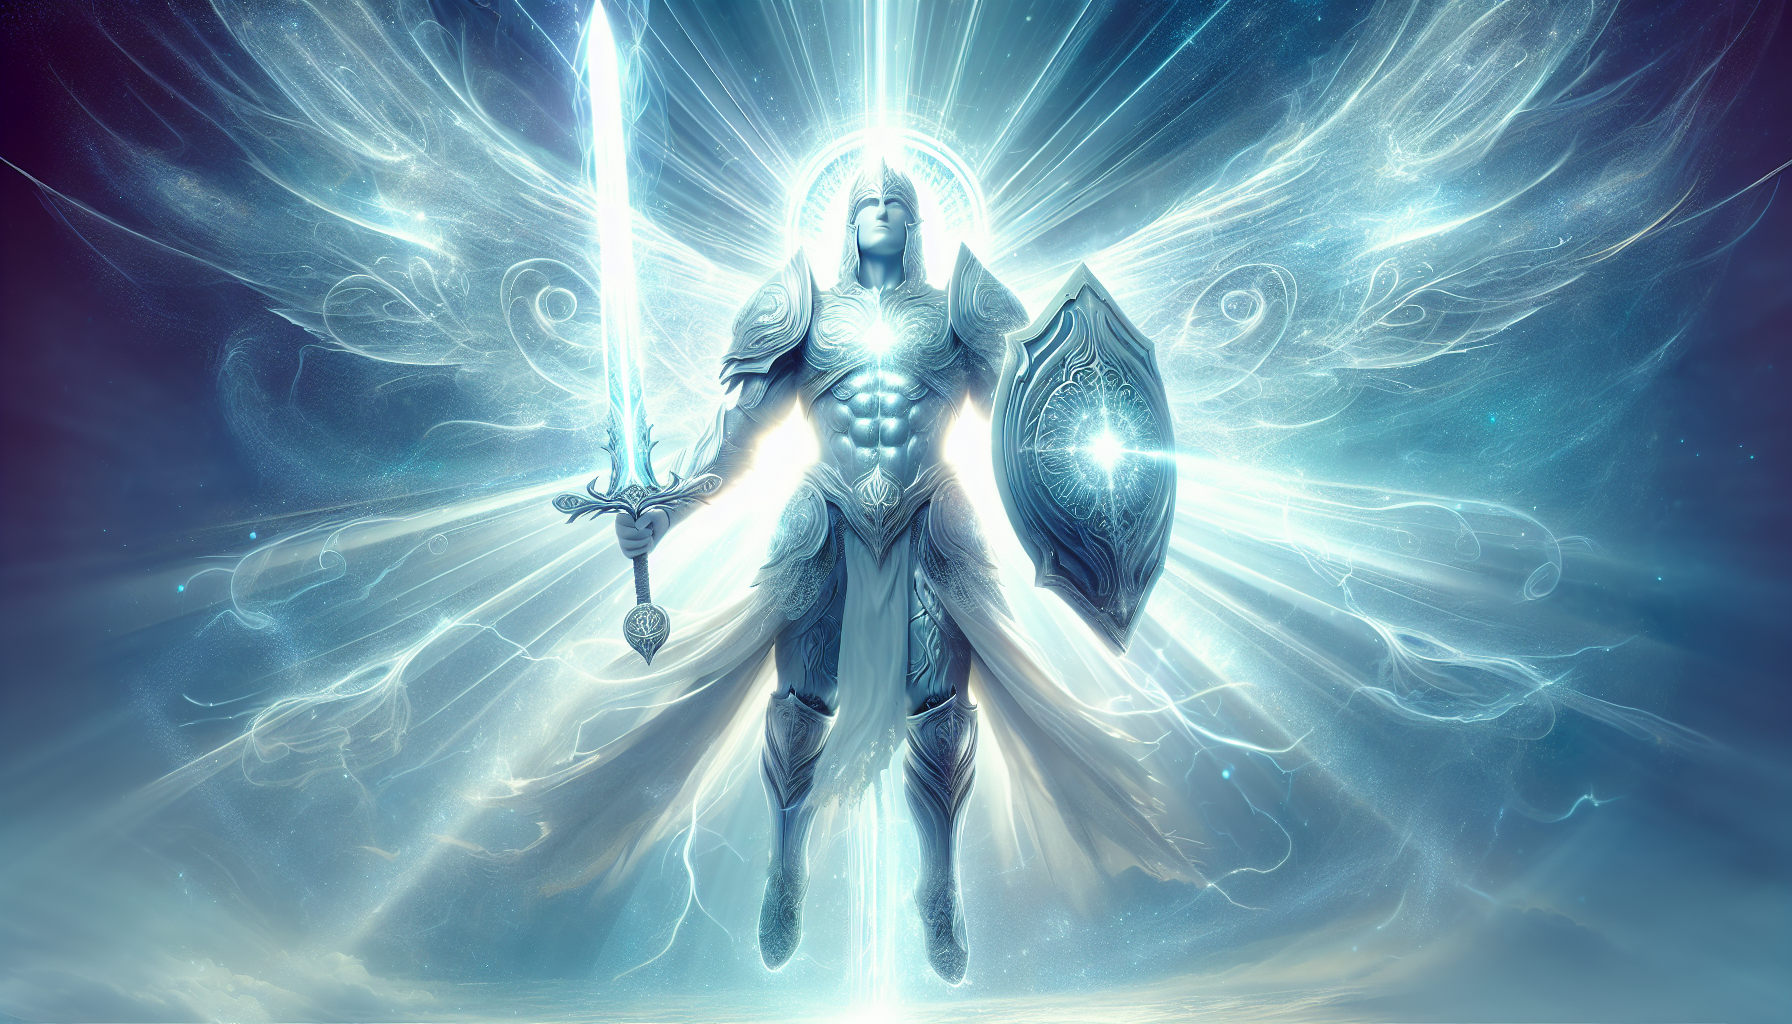 Warrior in spiritual armor wielding a sword and shield